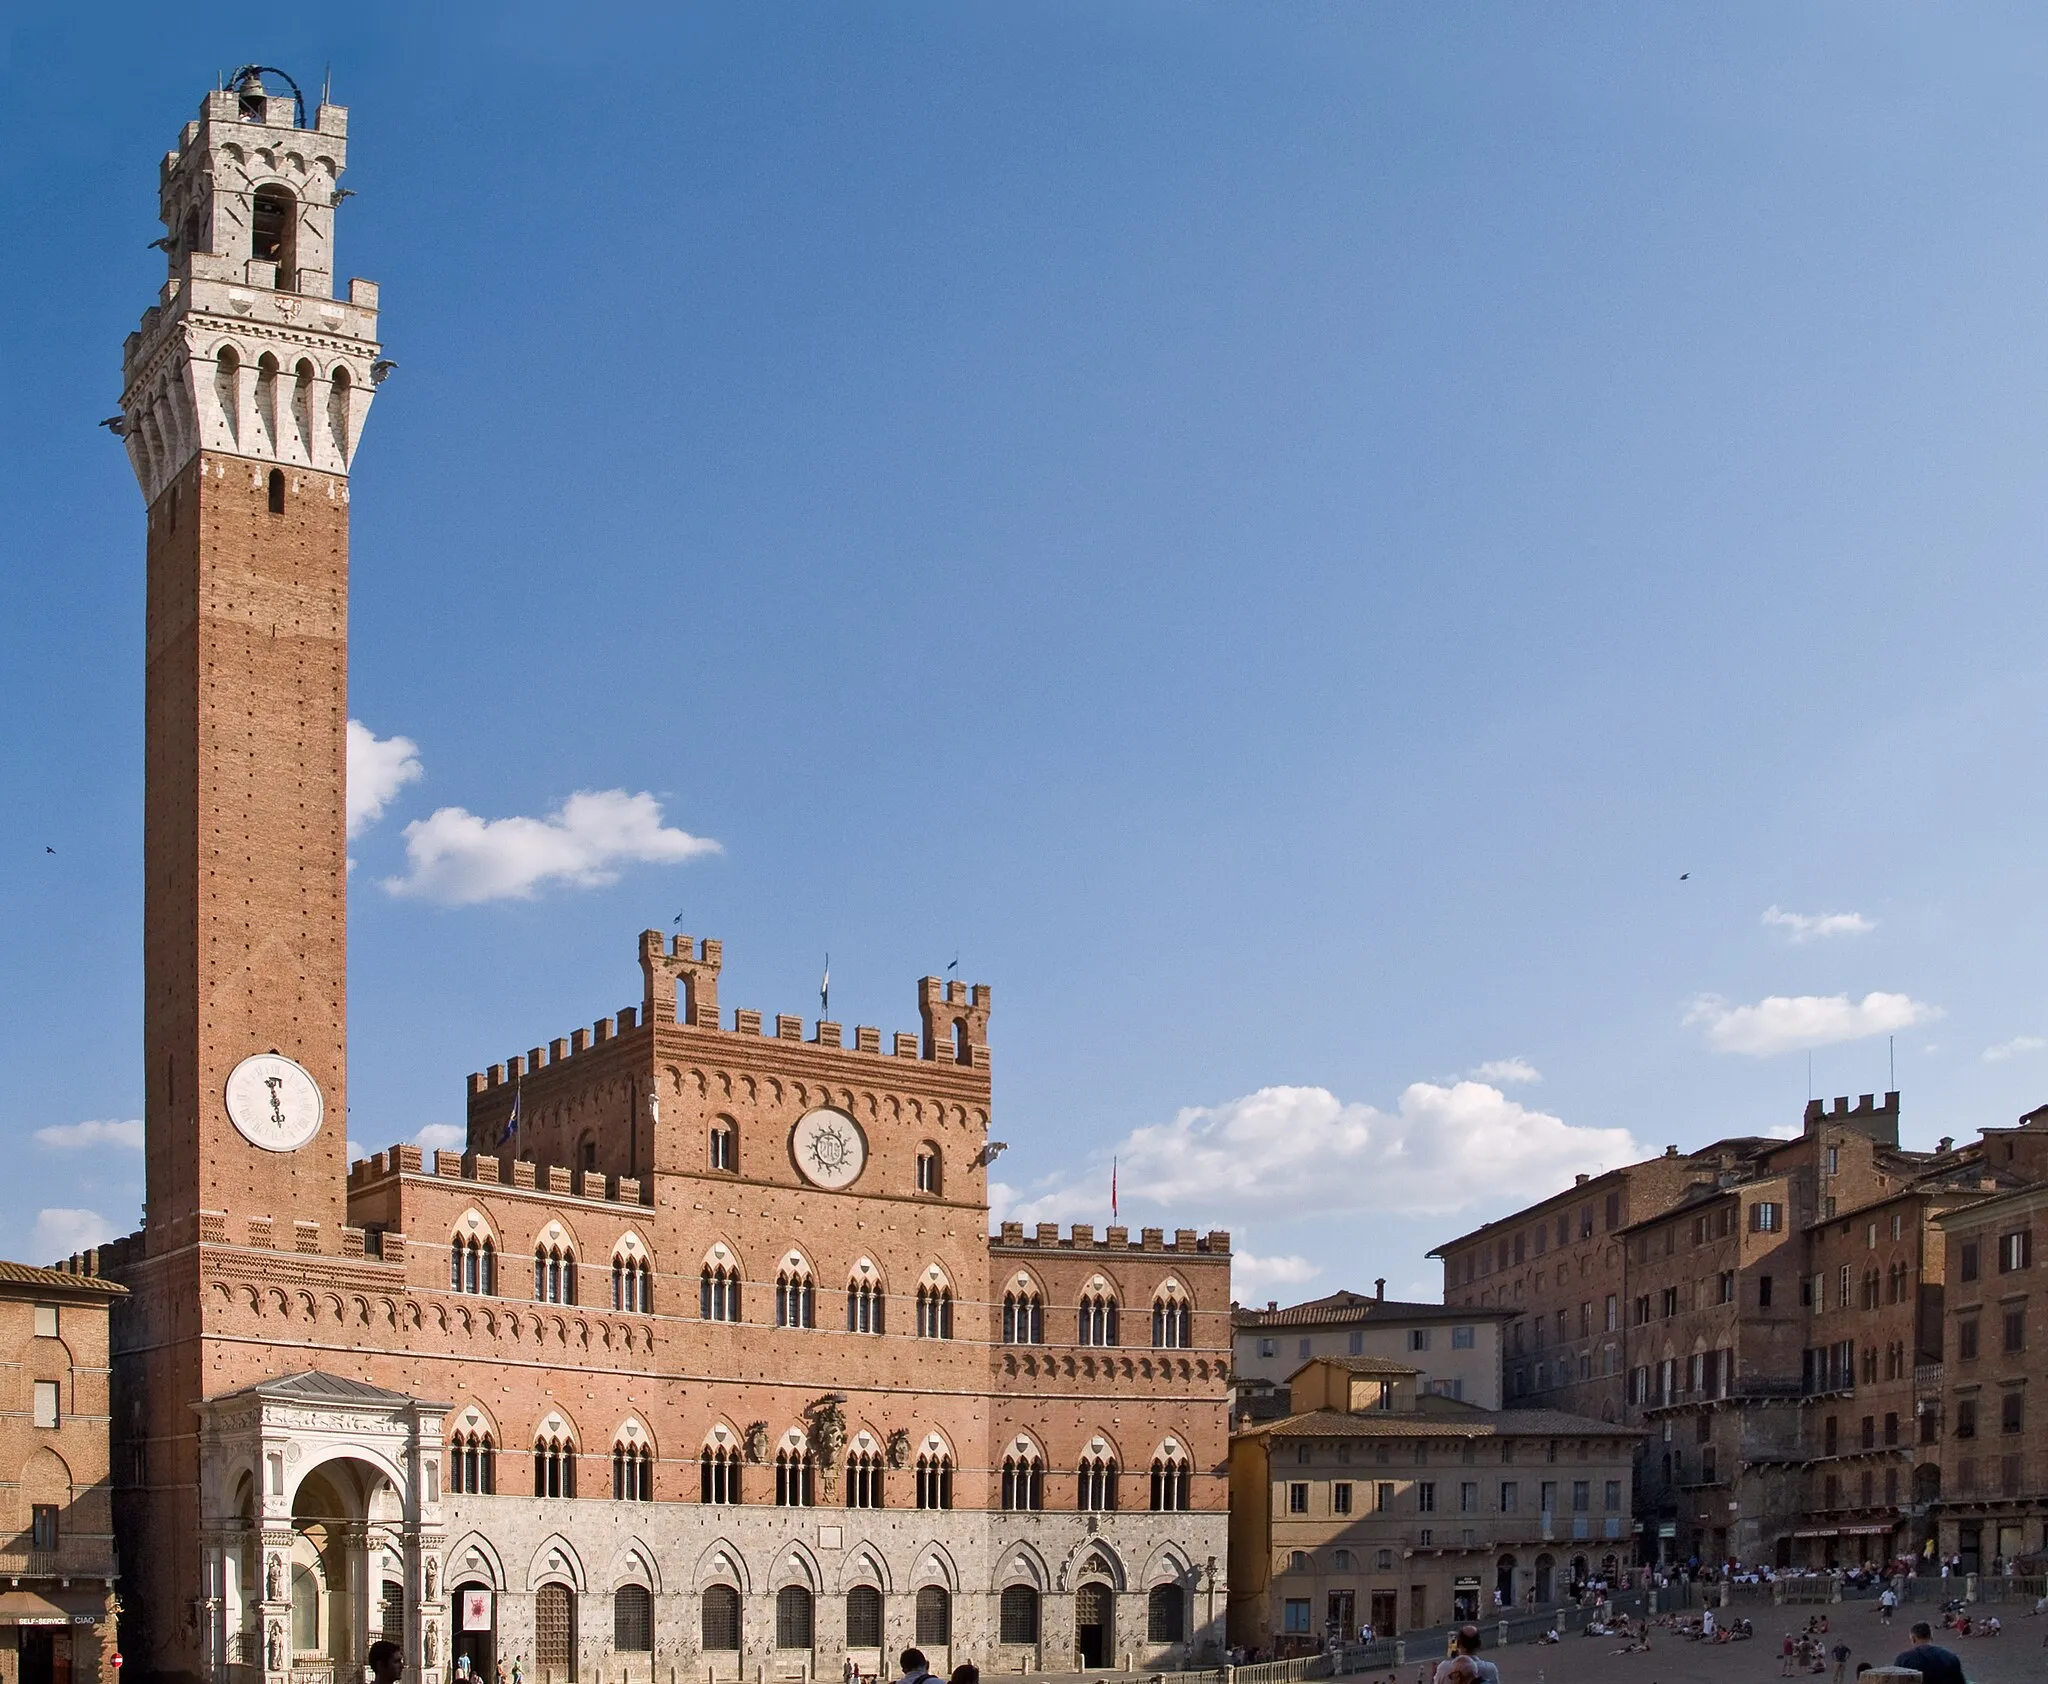 Image of Siena